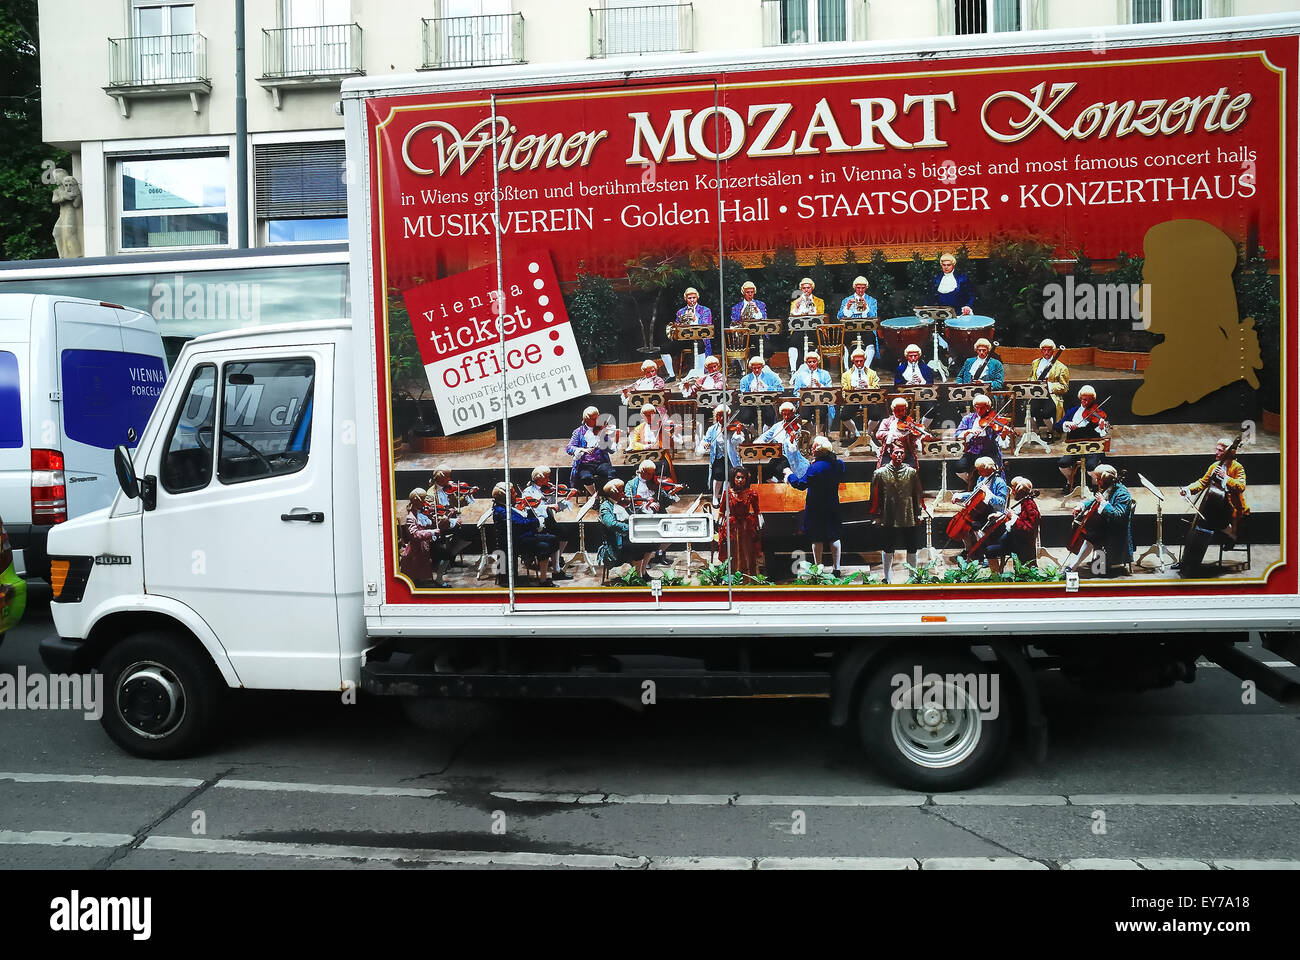 Austria, Vienna. Van advertising a Mozart concert at Vienna Opera House. Stock Photo